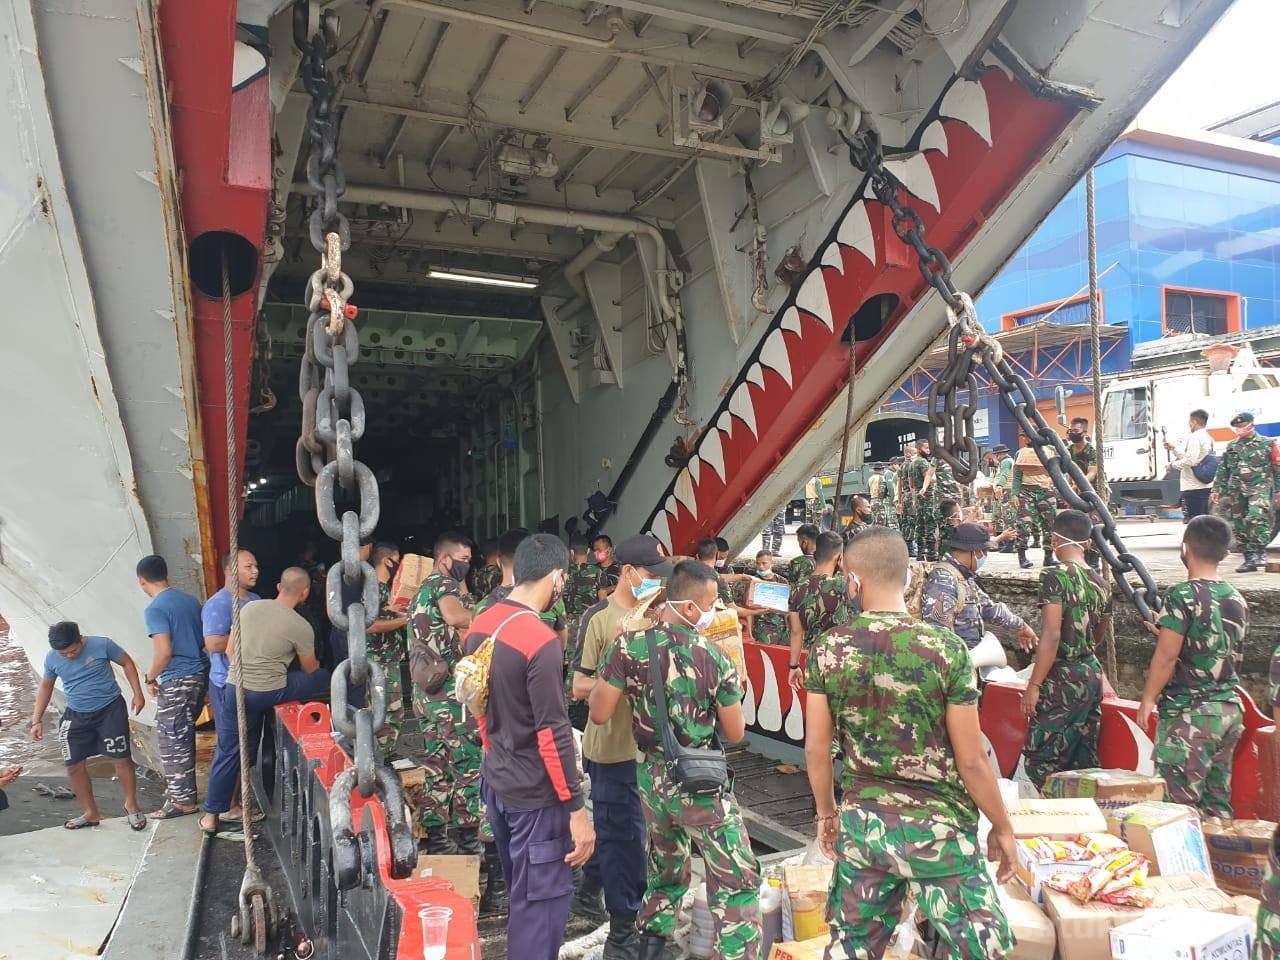 TNI KRI TELUK HADING 538 DEBARKASI BANTUAN LOGISTIK